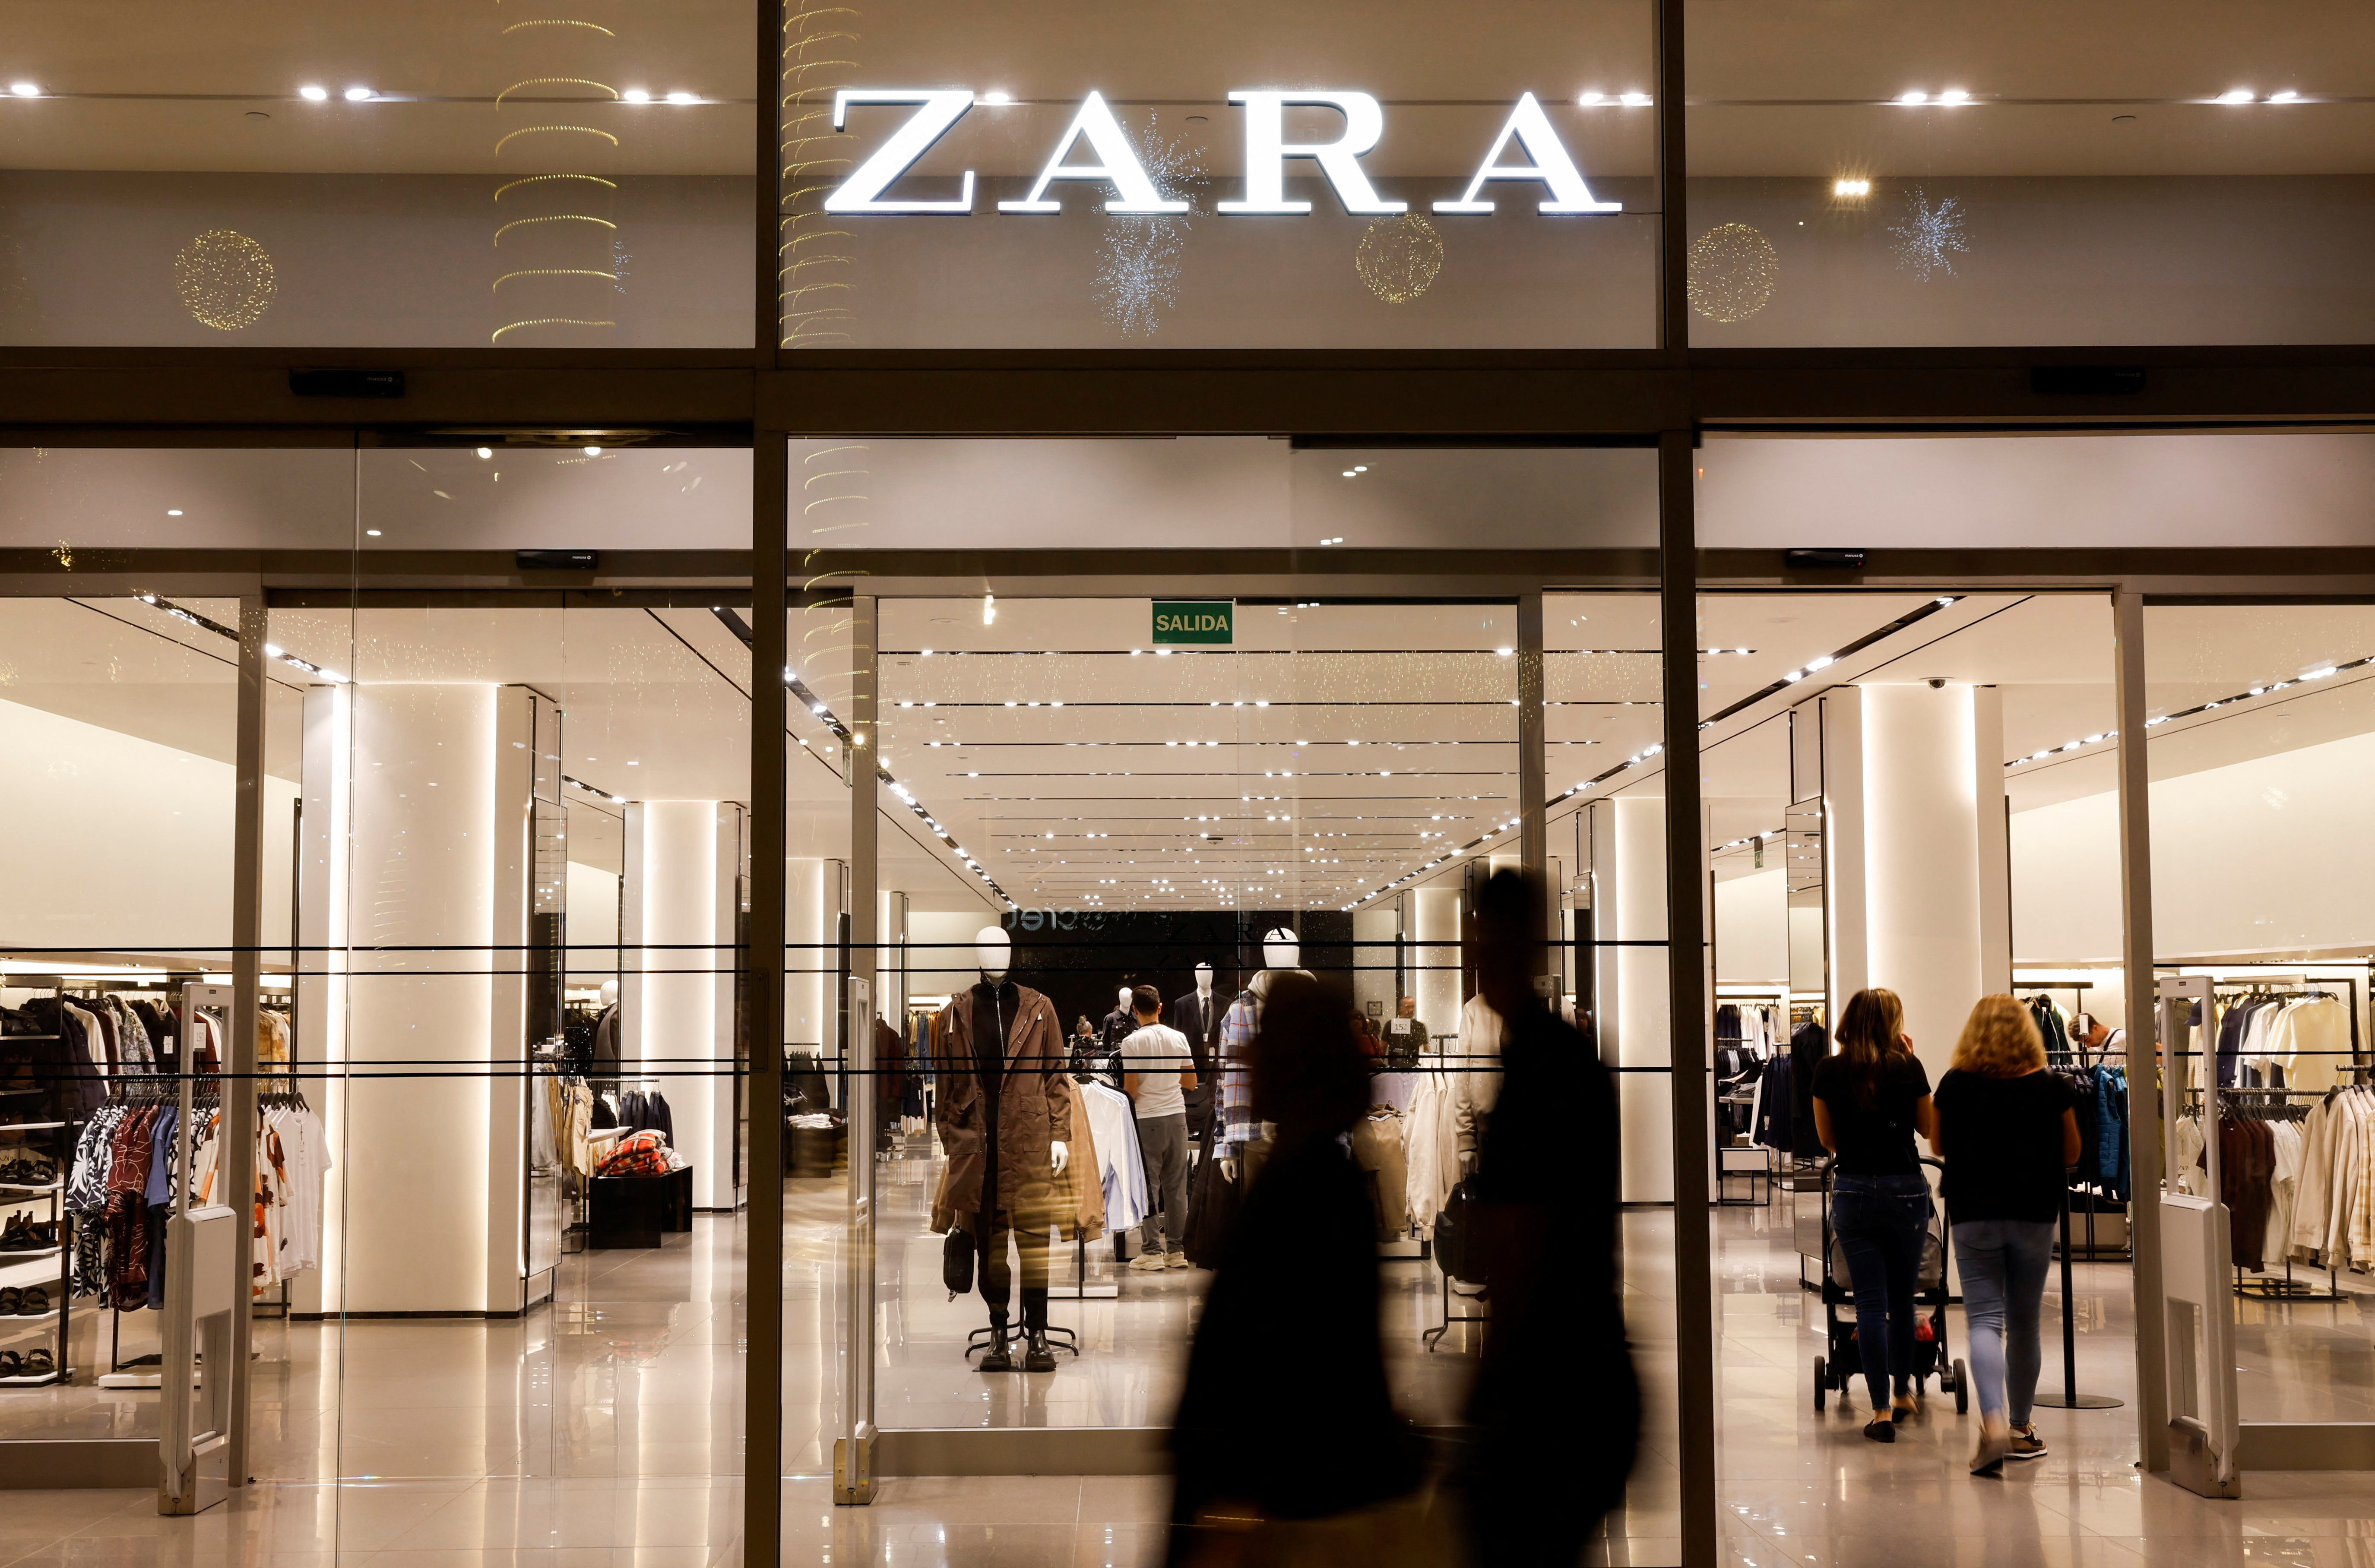 Zara owner Inditex seen outshining H&M in fast-fashion showdown | Reuters